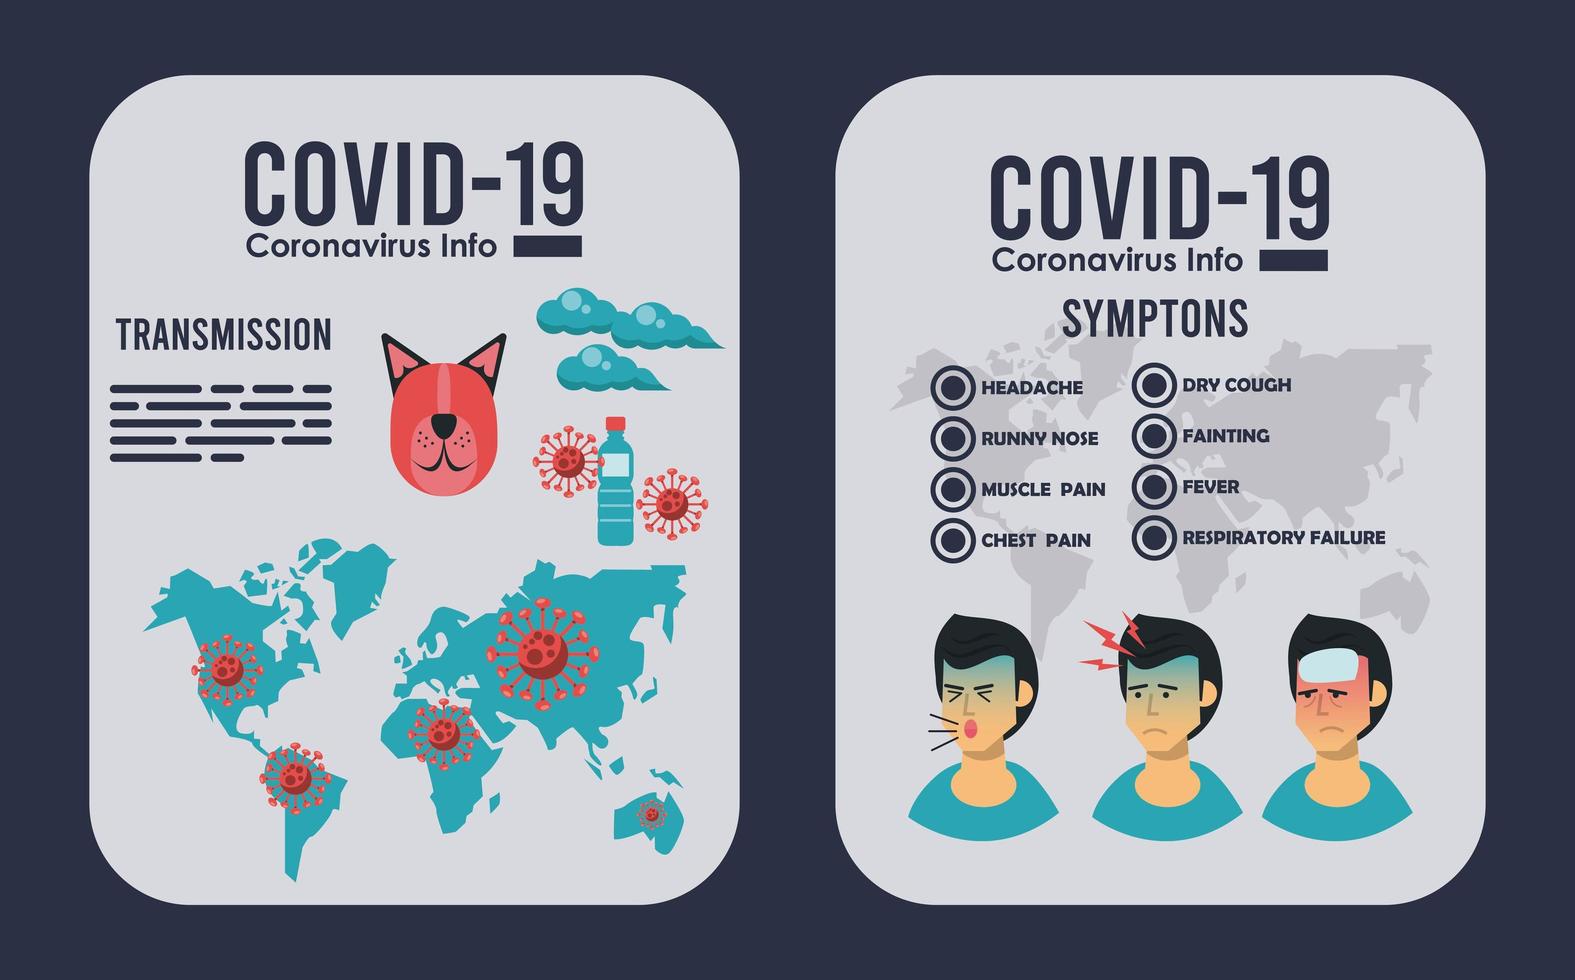 infográfico de vírus corona com sintomas vetor